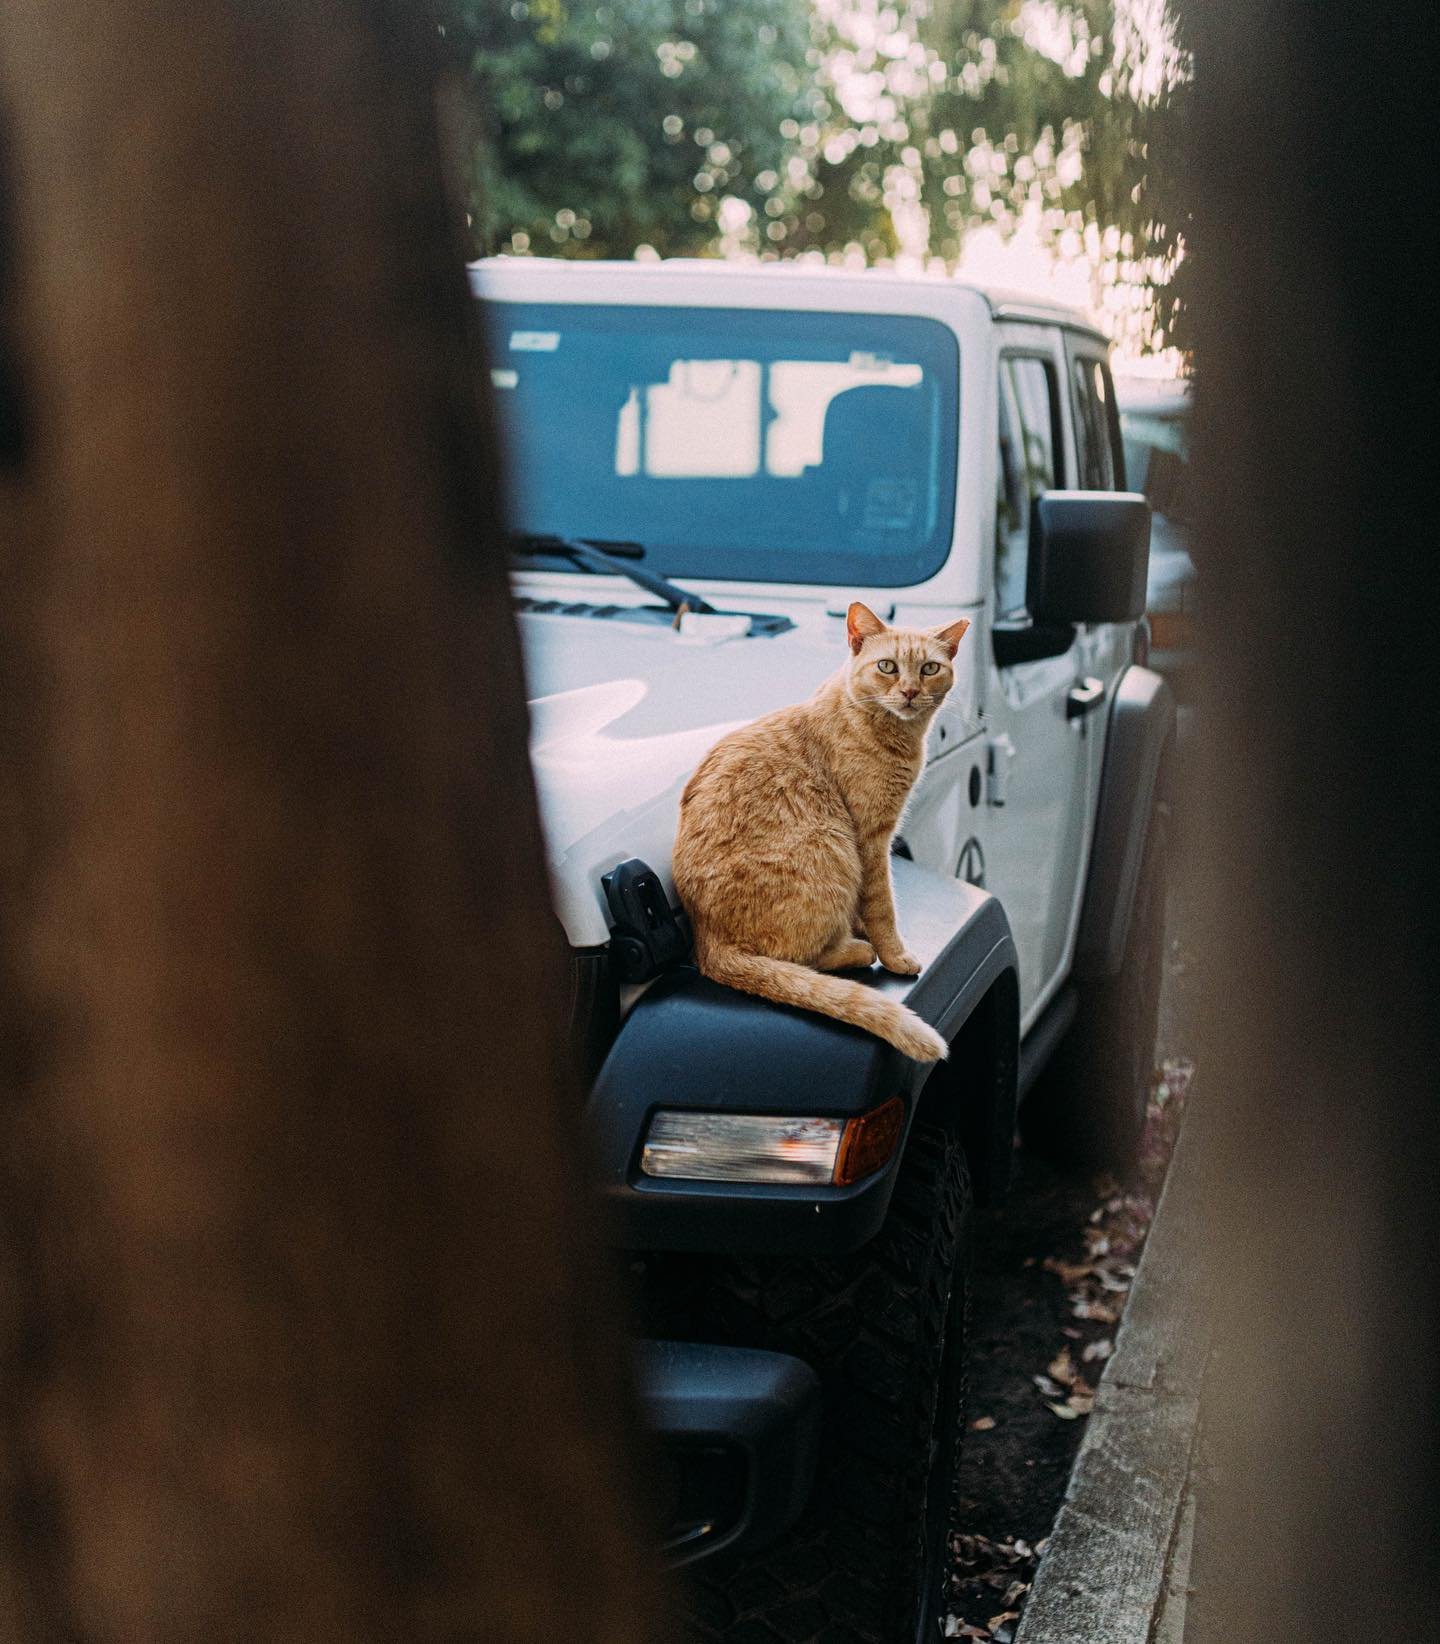 Meow #cat #jeep #favoriteshotofthetrip #puertorico #oldsanjuan